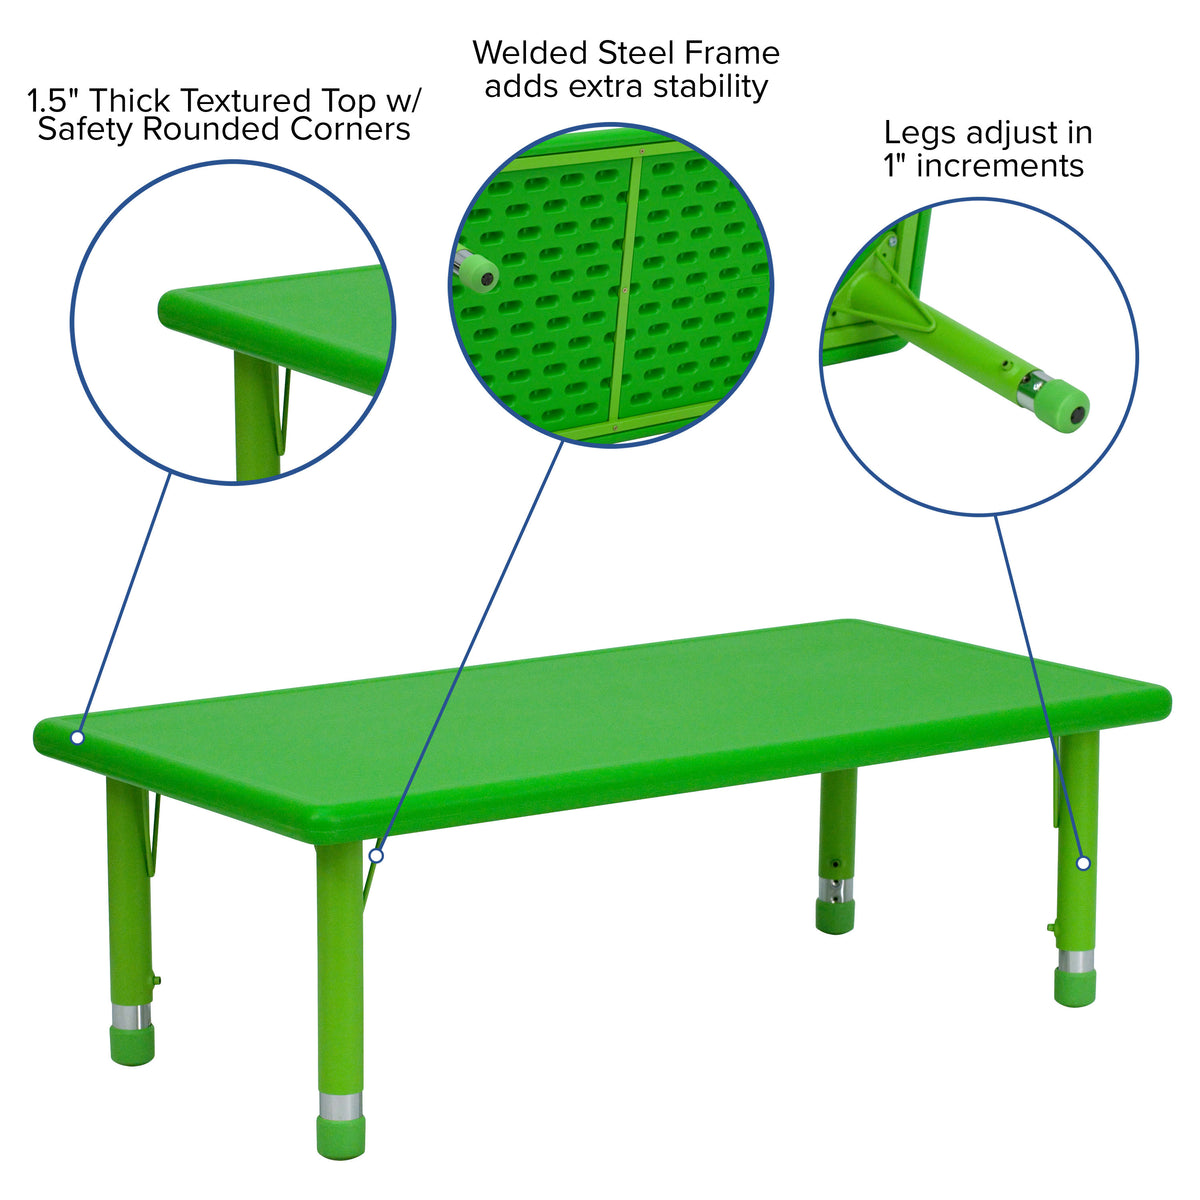 Green |#| 24inchW x 48inchL Rectangular Green Plastic Height Adjustable Activity Table